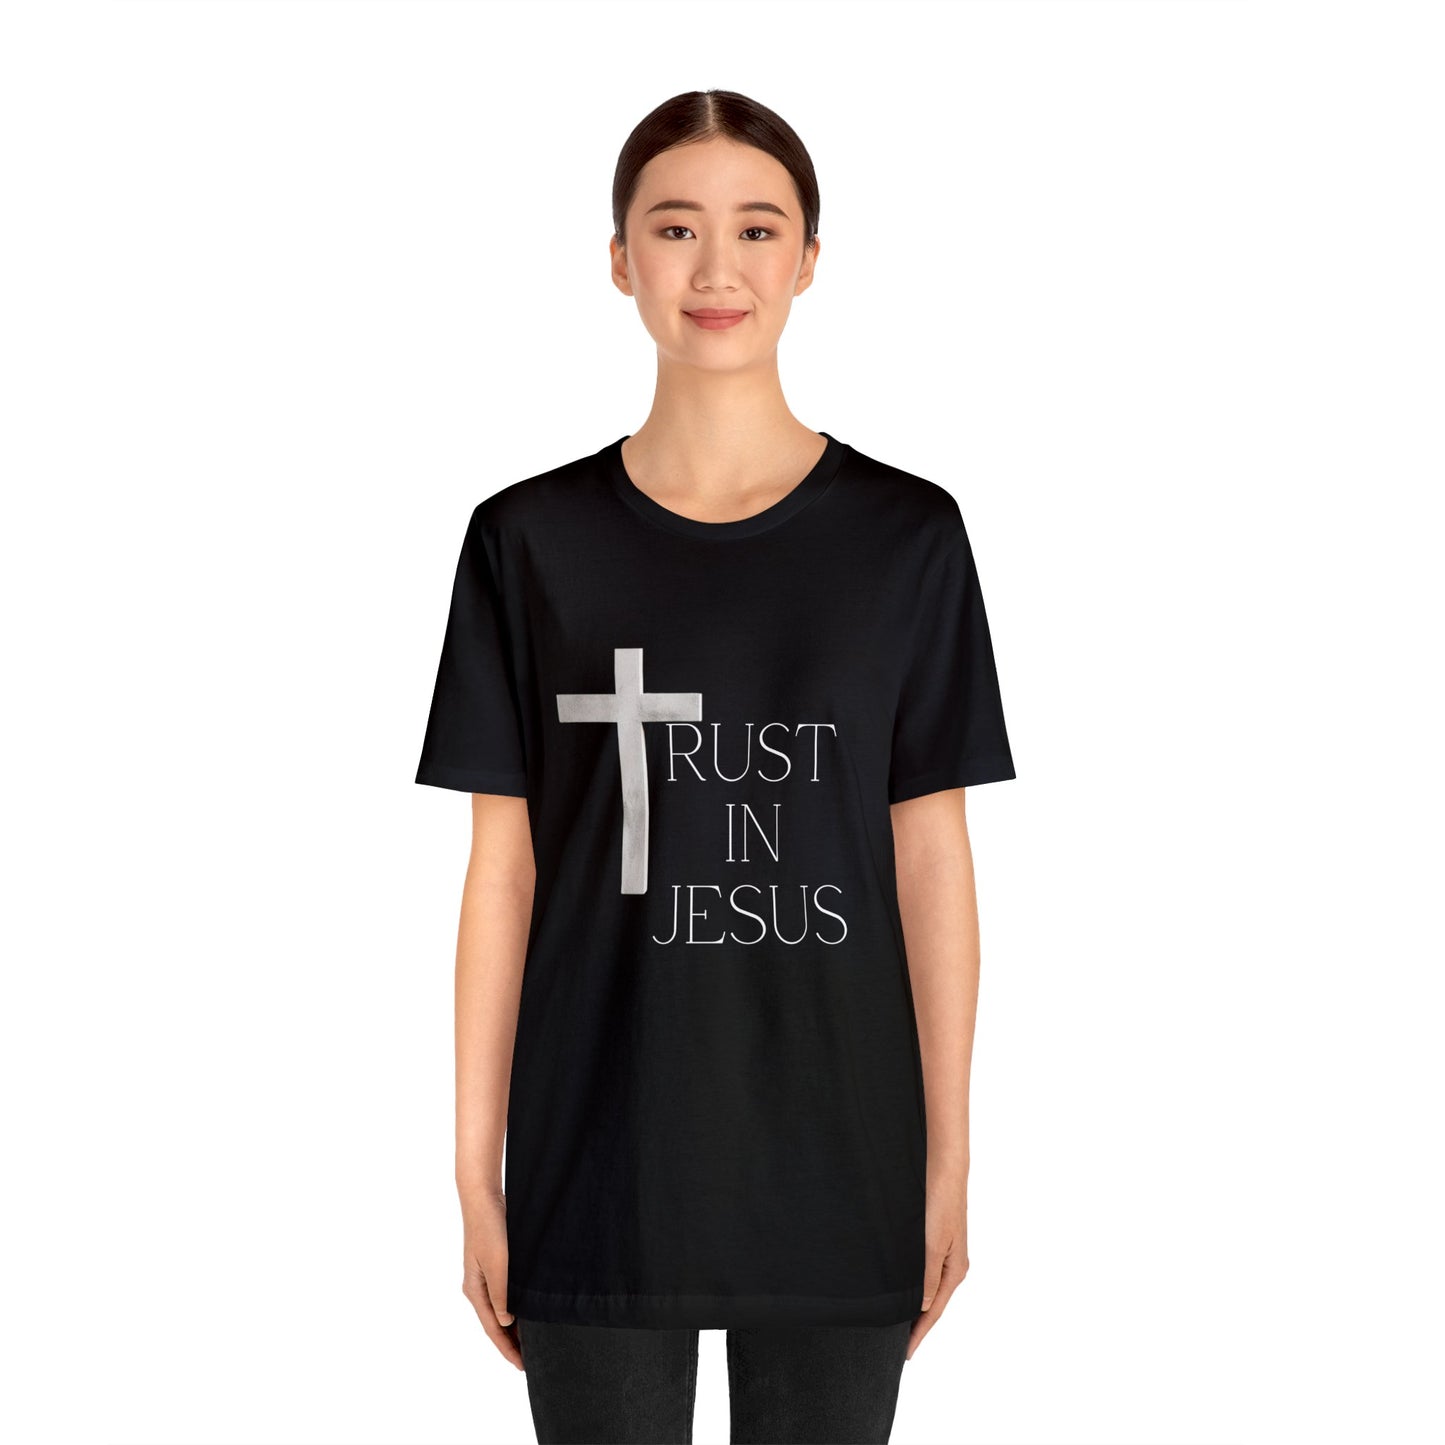 Trust in Jesus, Christian T-shirt for Men and Women